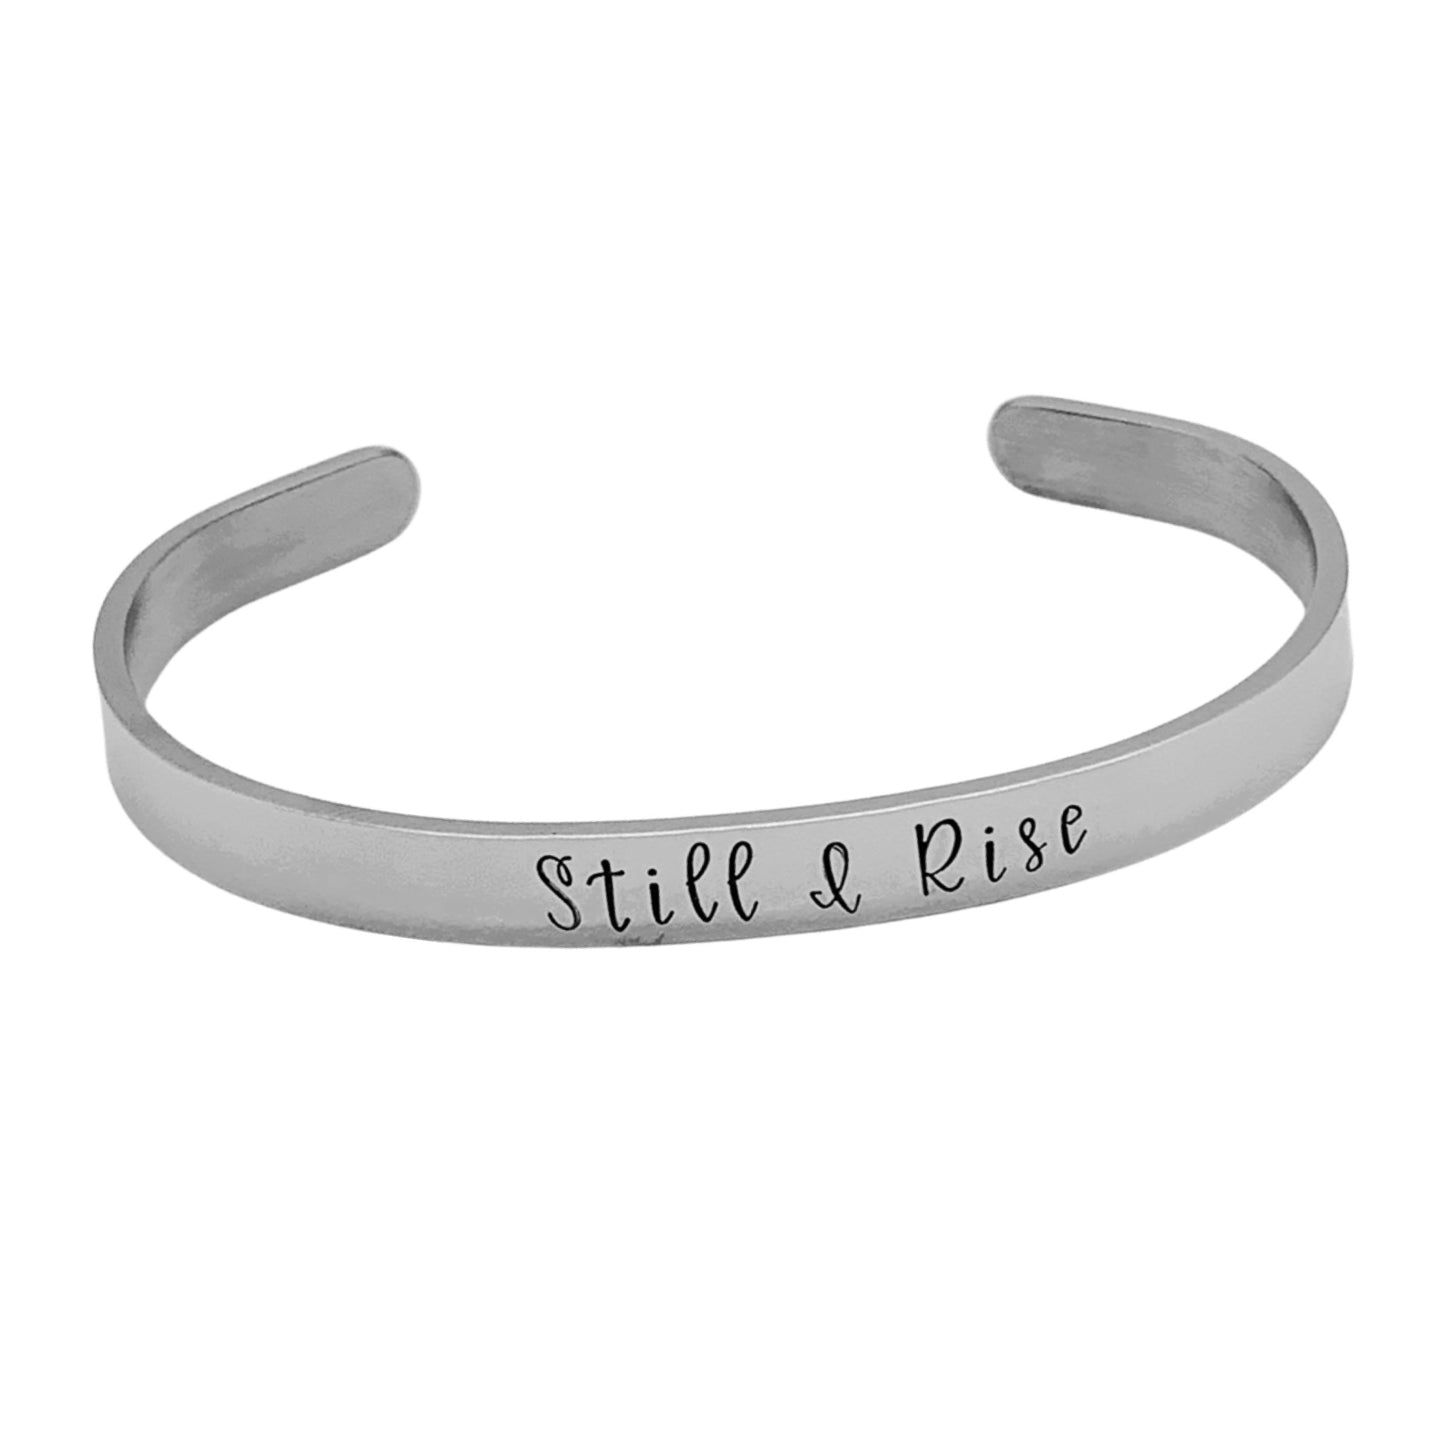 Still I Rise - Cuff Bracelet